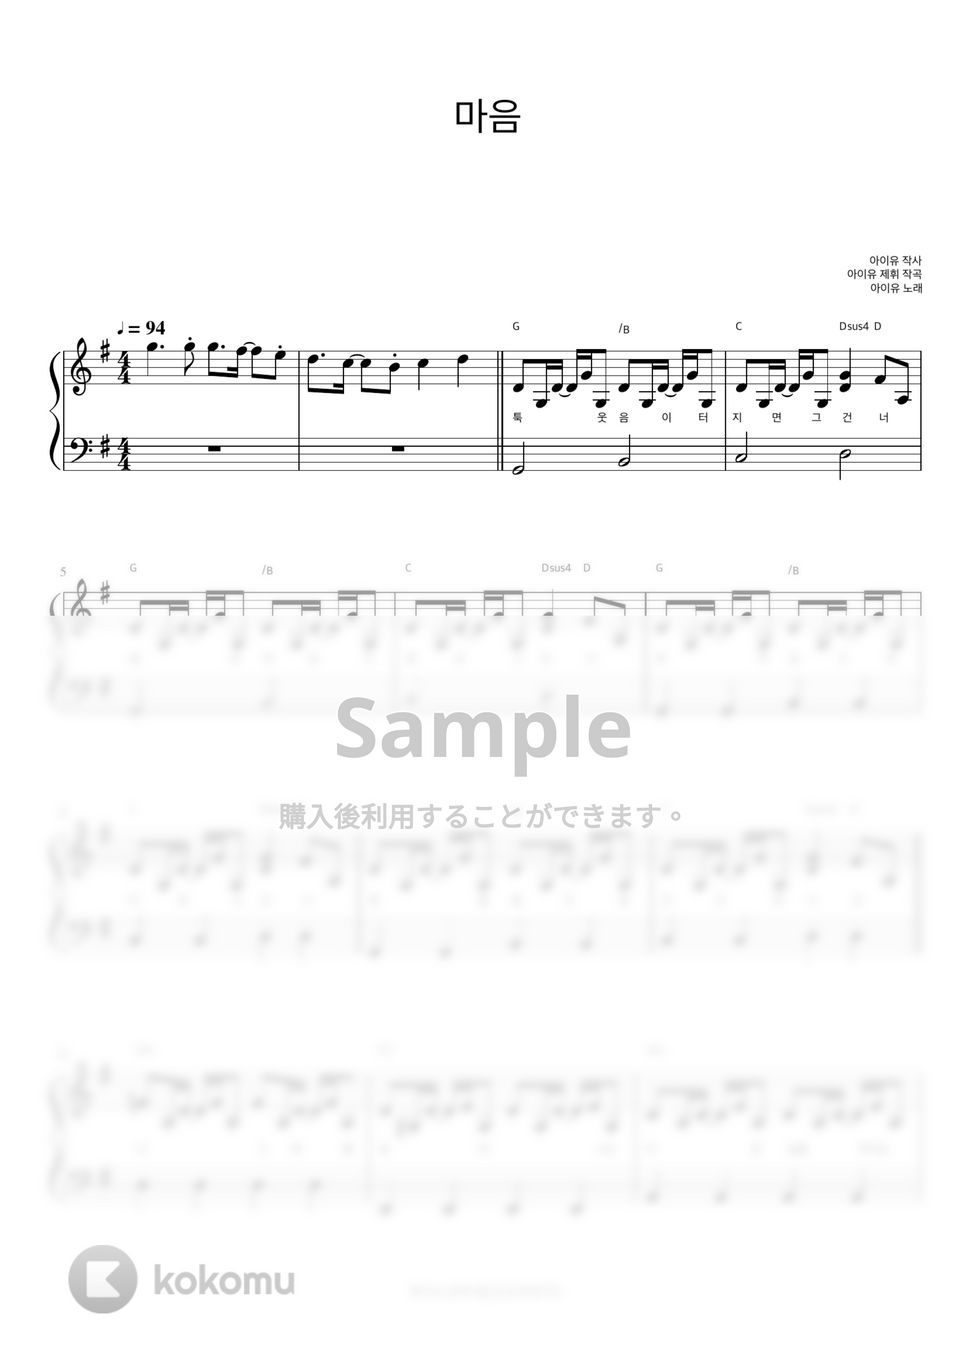 IU - Heart (伴奏楽譜) by 피아노정류장